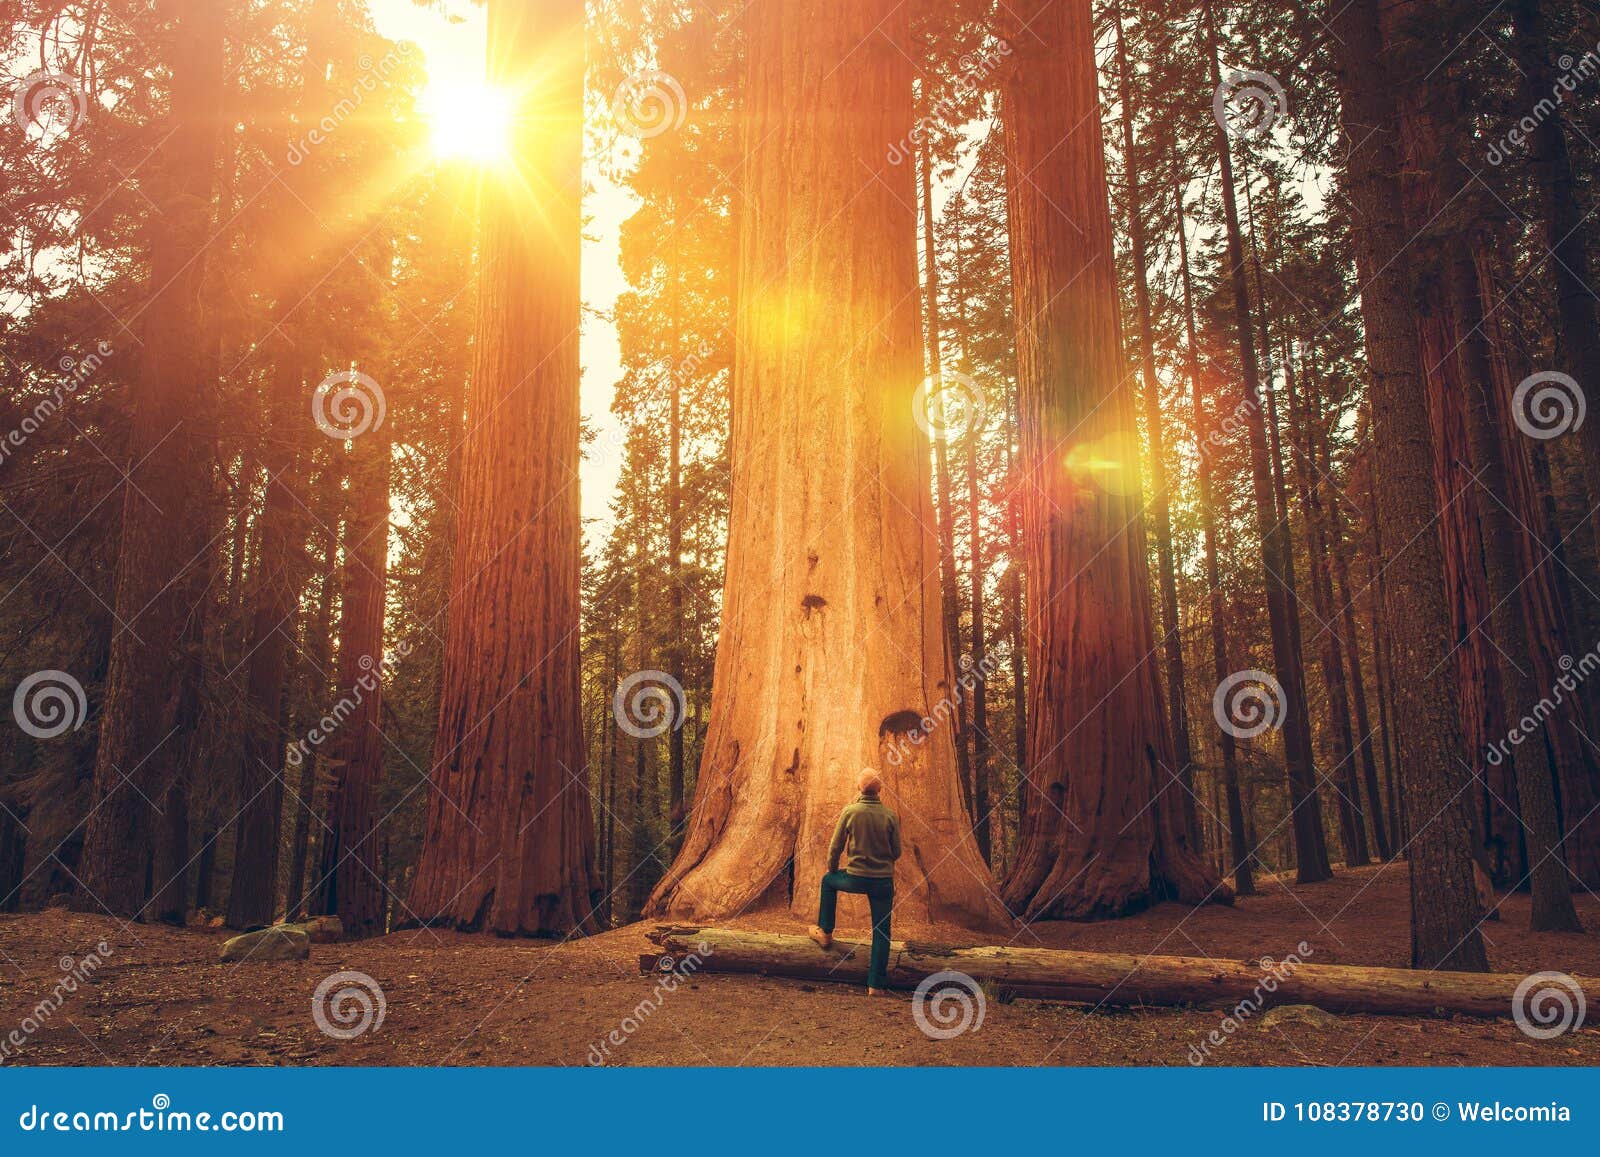 hiker in front of giant sequoia